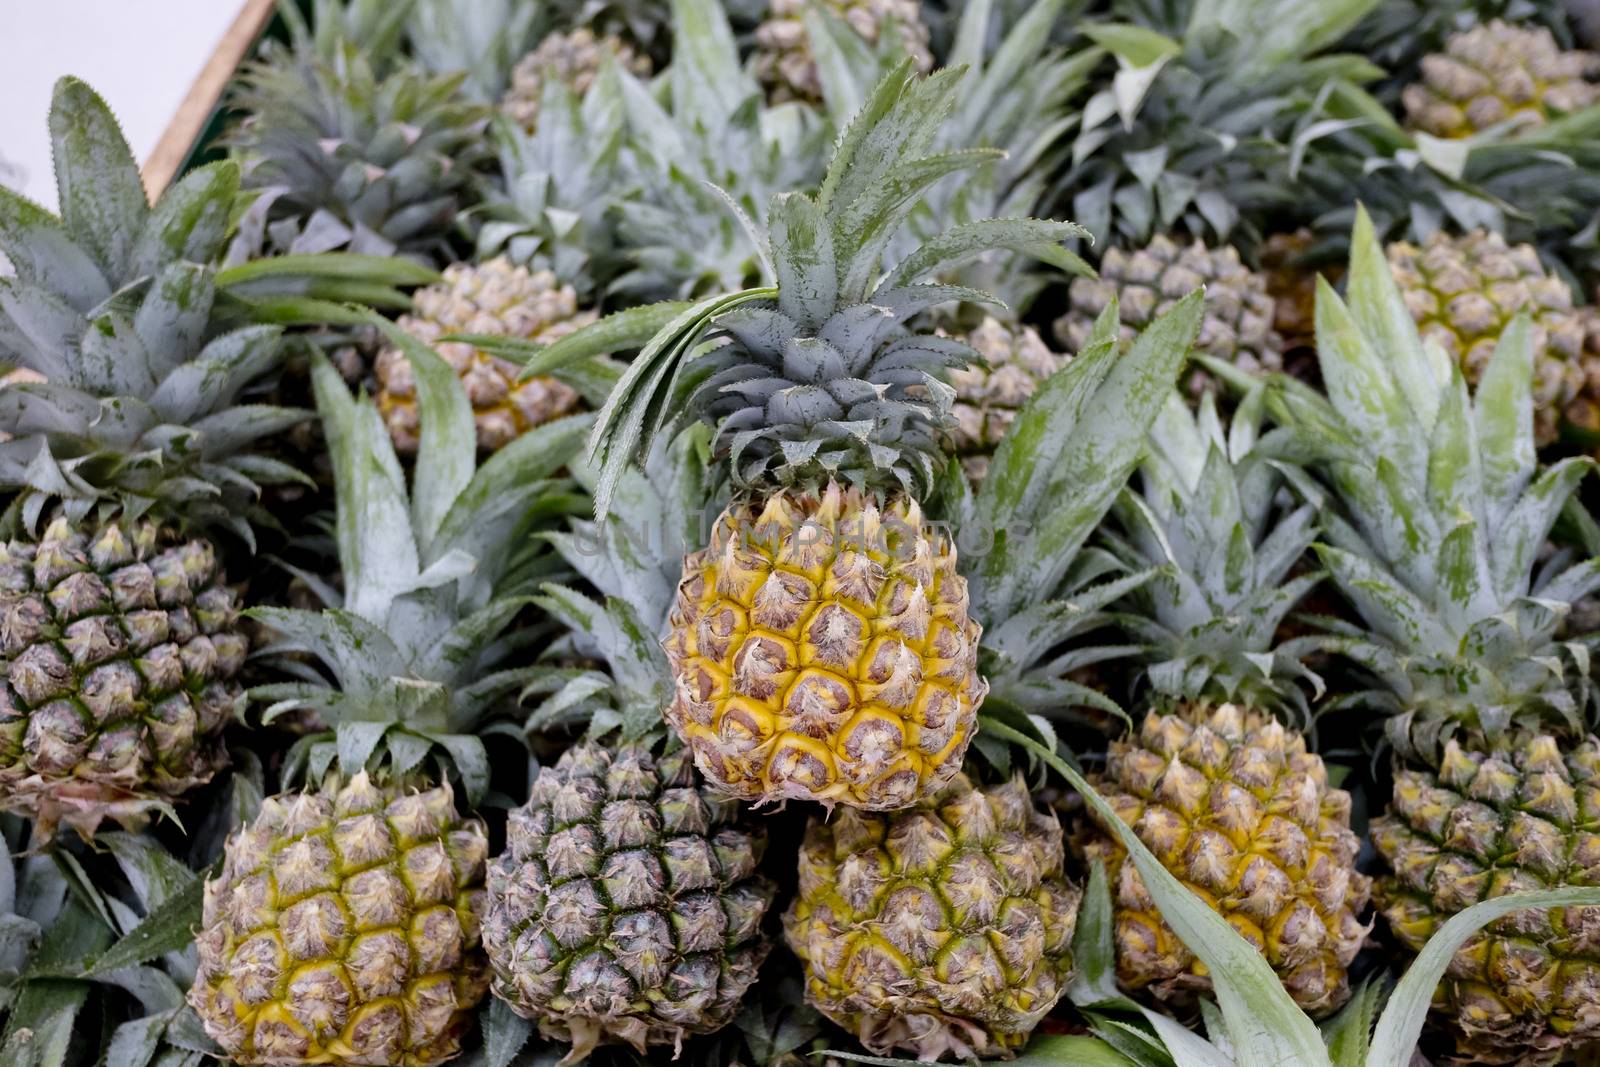 pineapples in market